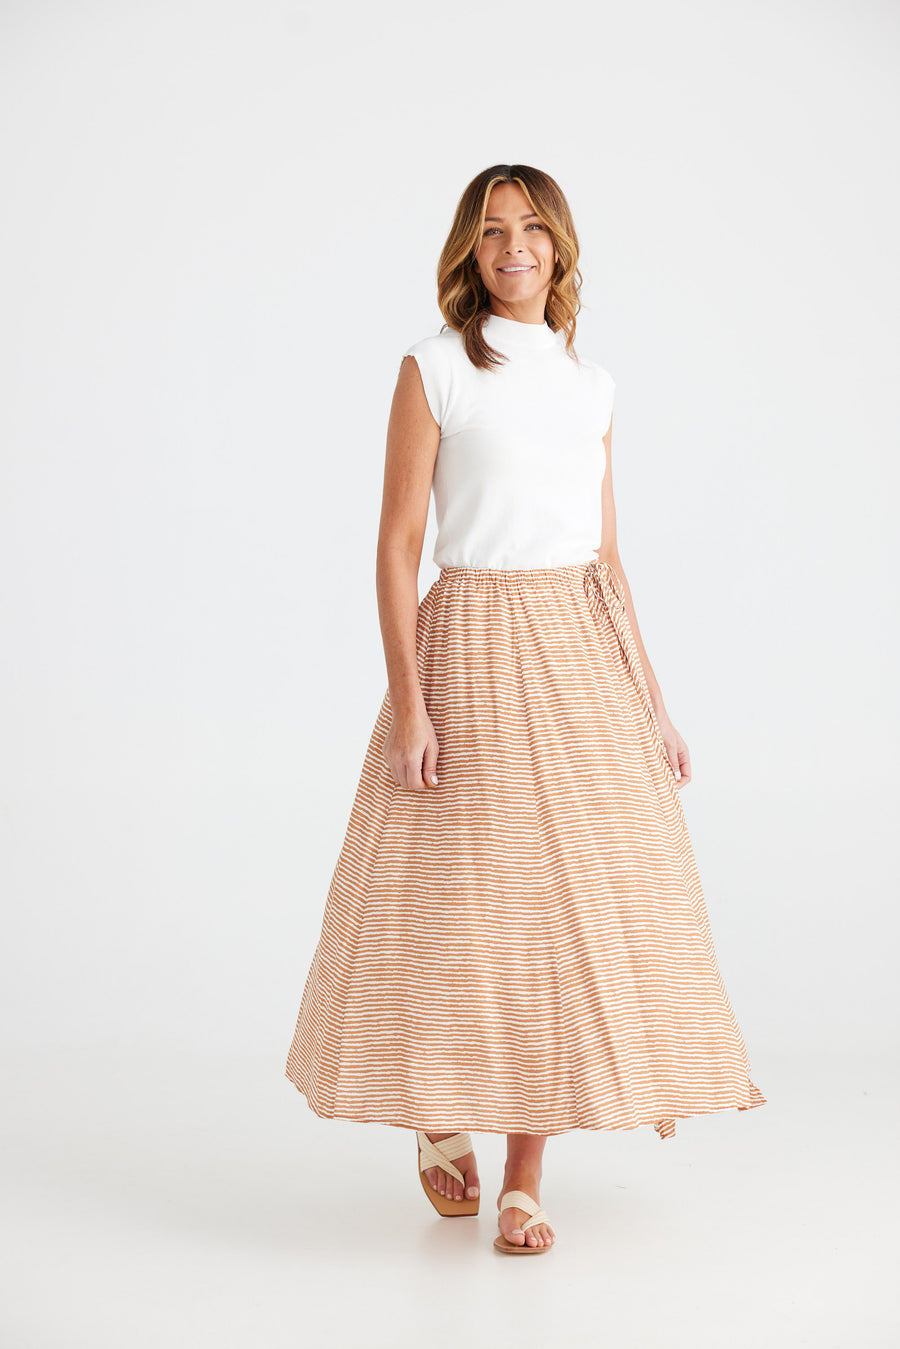 Second Valley Skirt - Tan Stripe